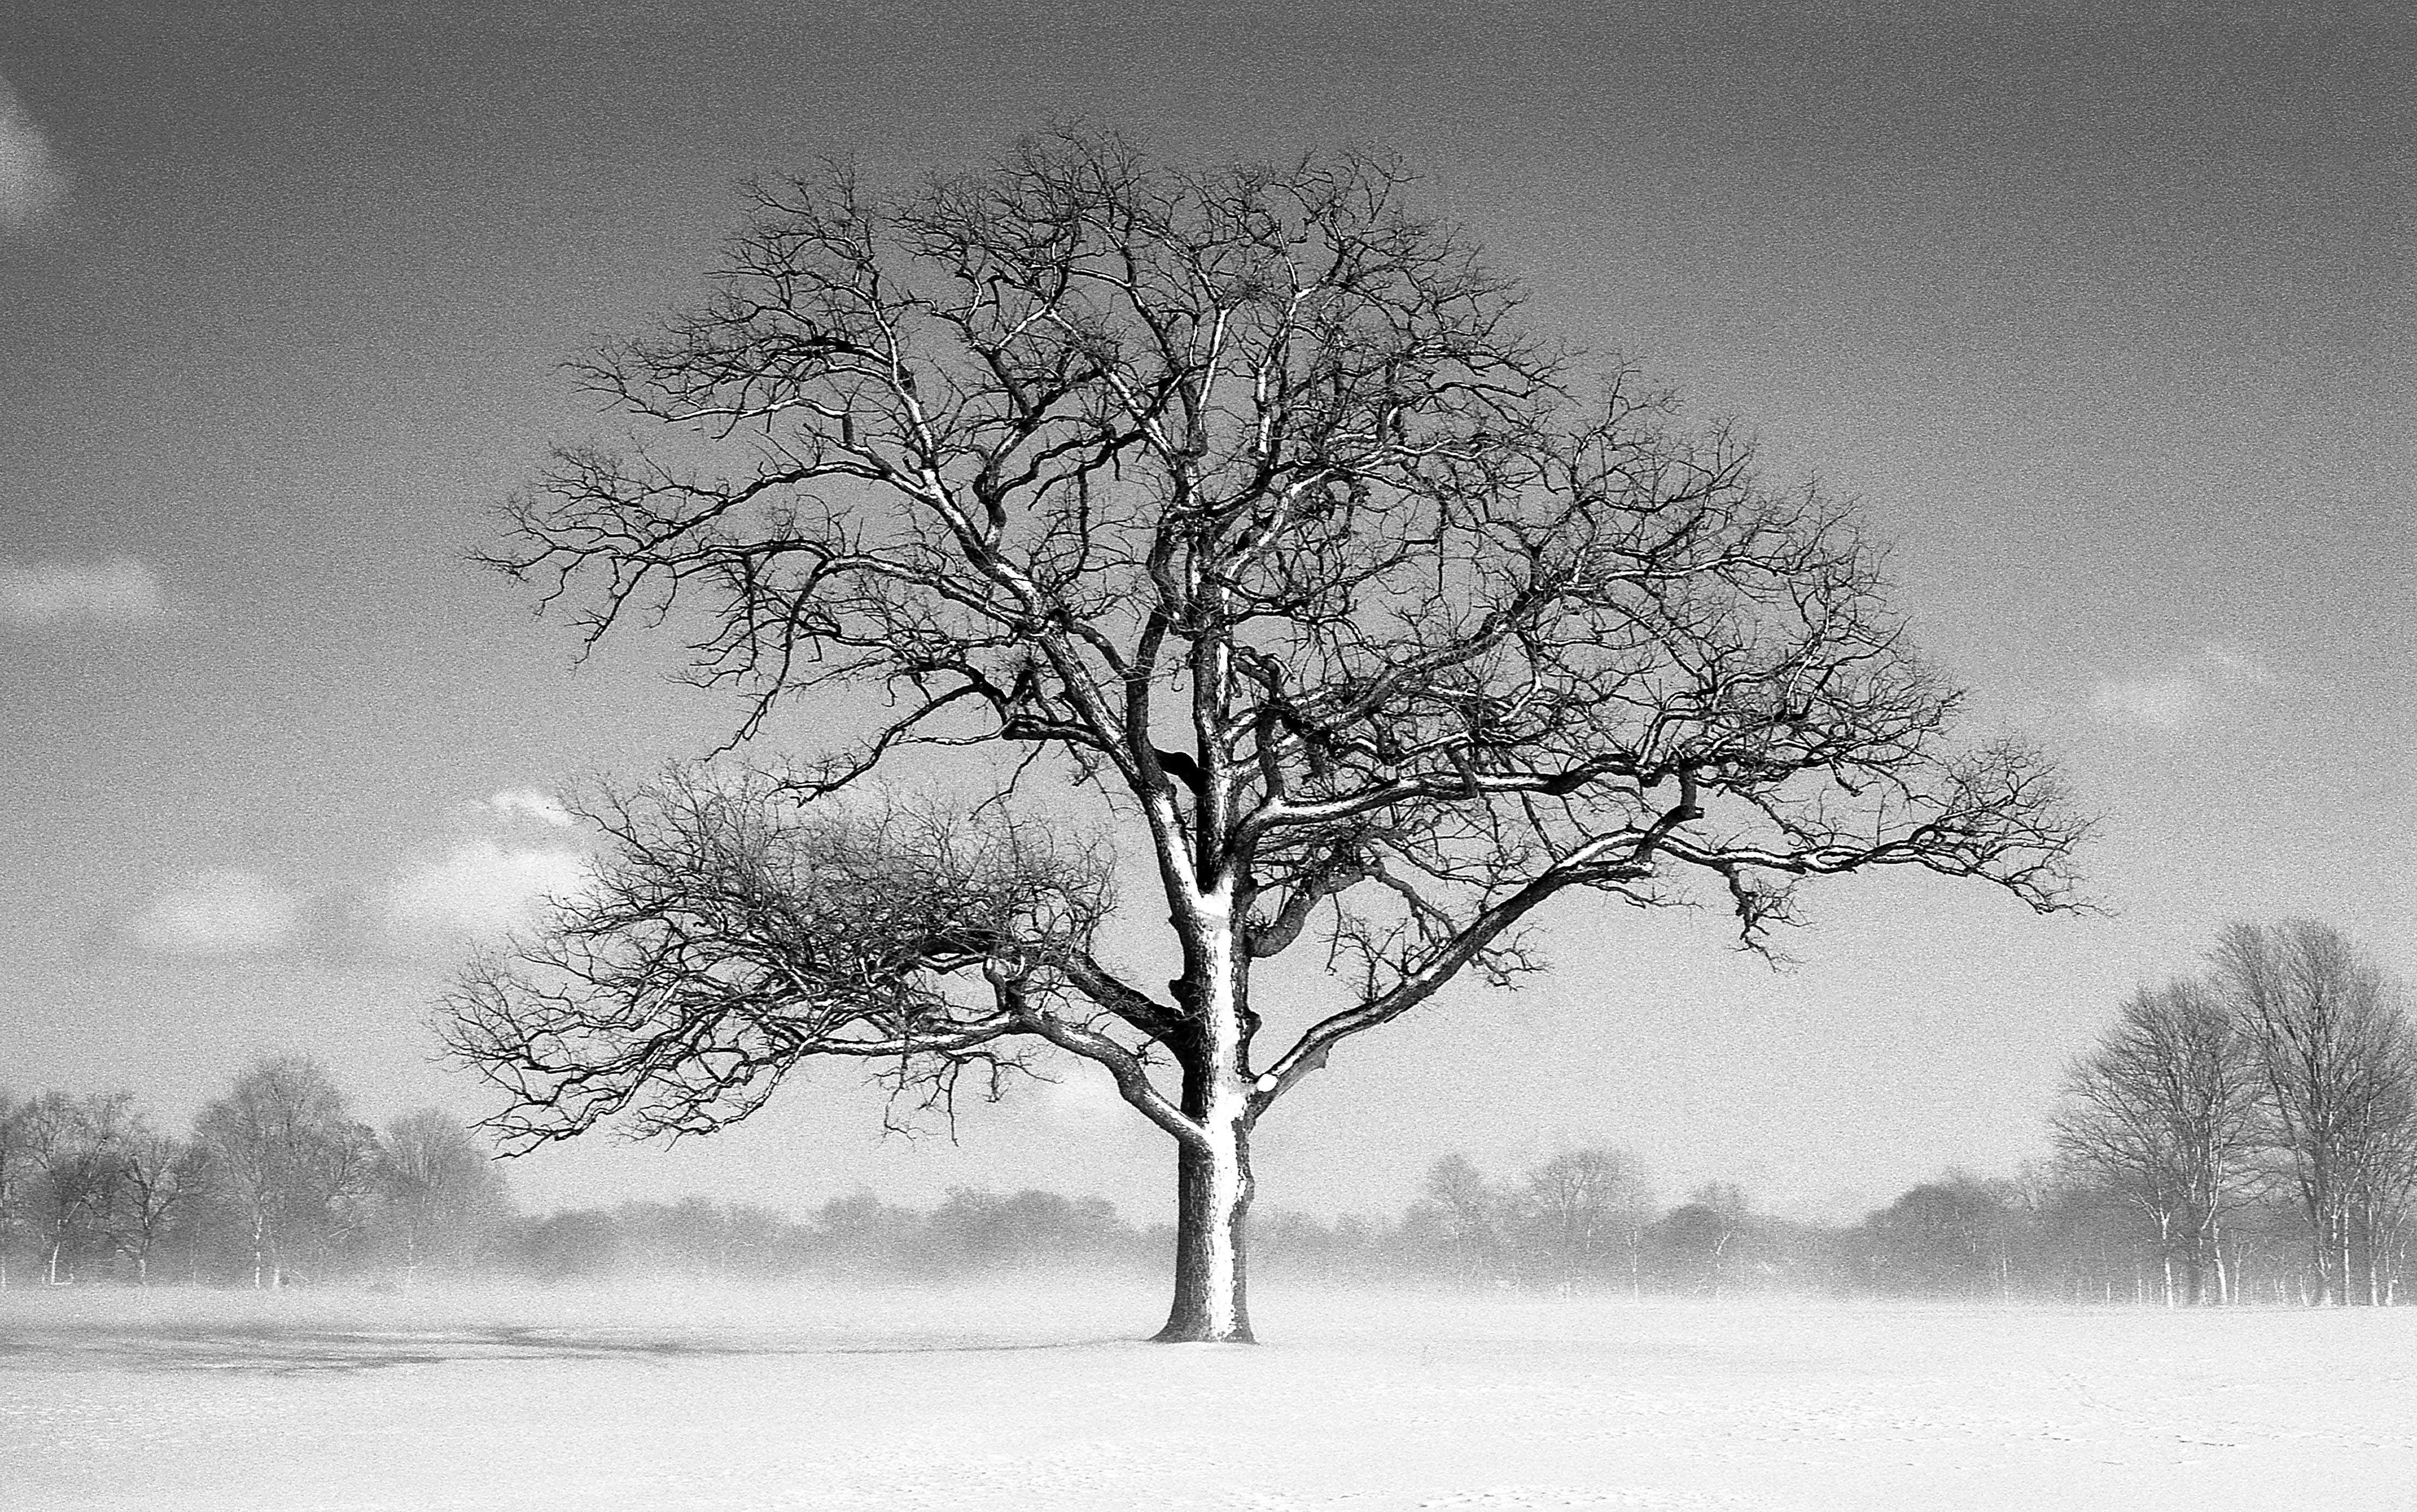 Delaware Park Winter Tree - Buffalo, New York - 1999